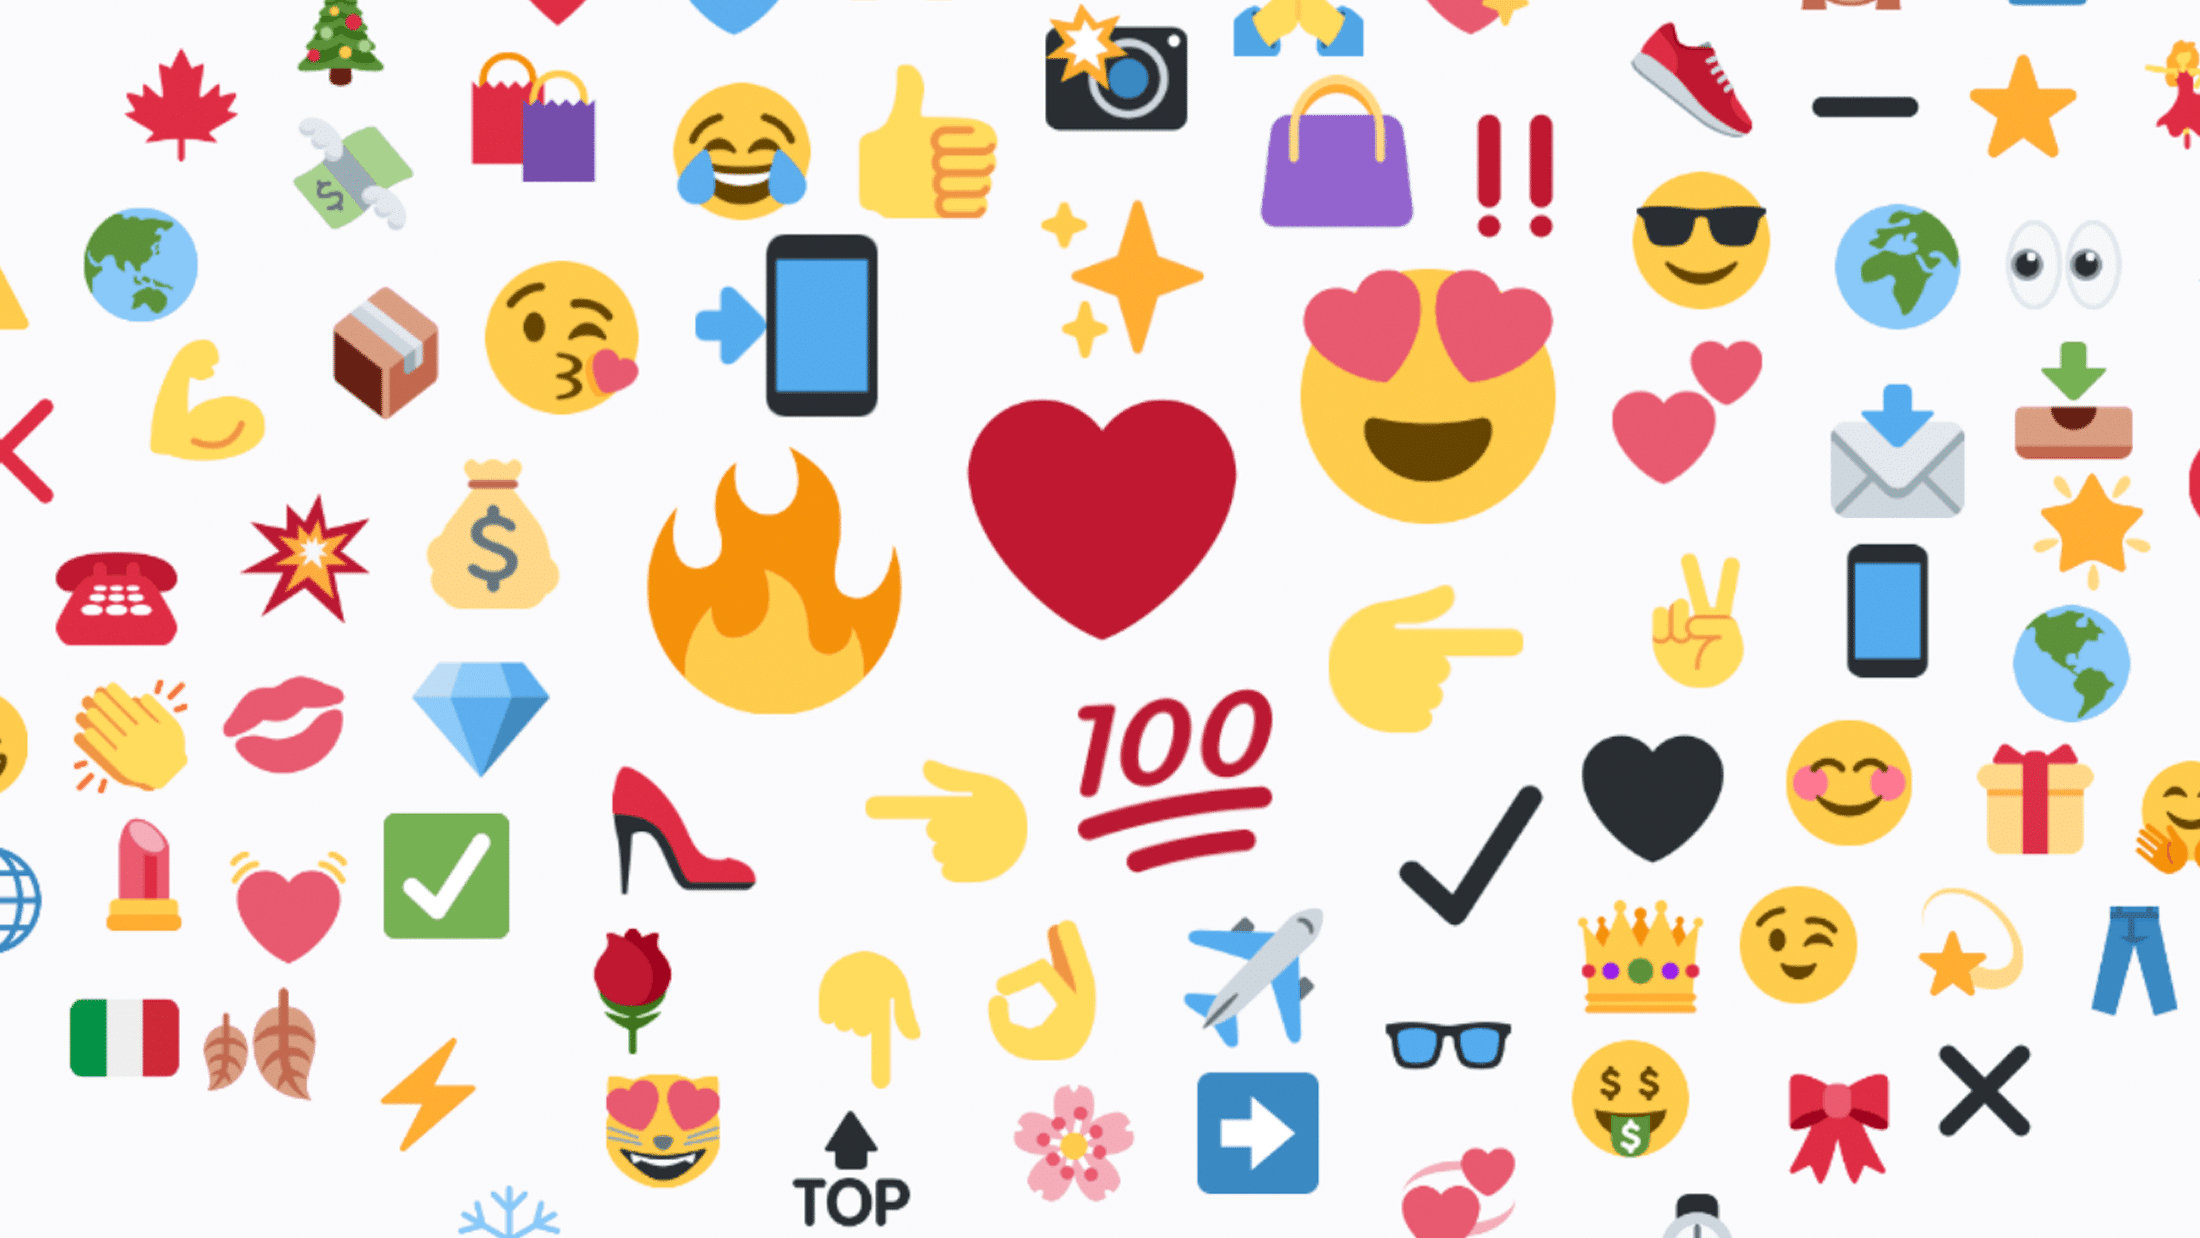 The Most Popular Emojis